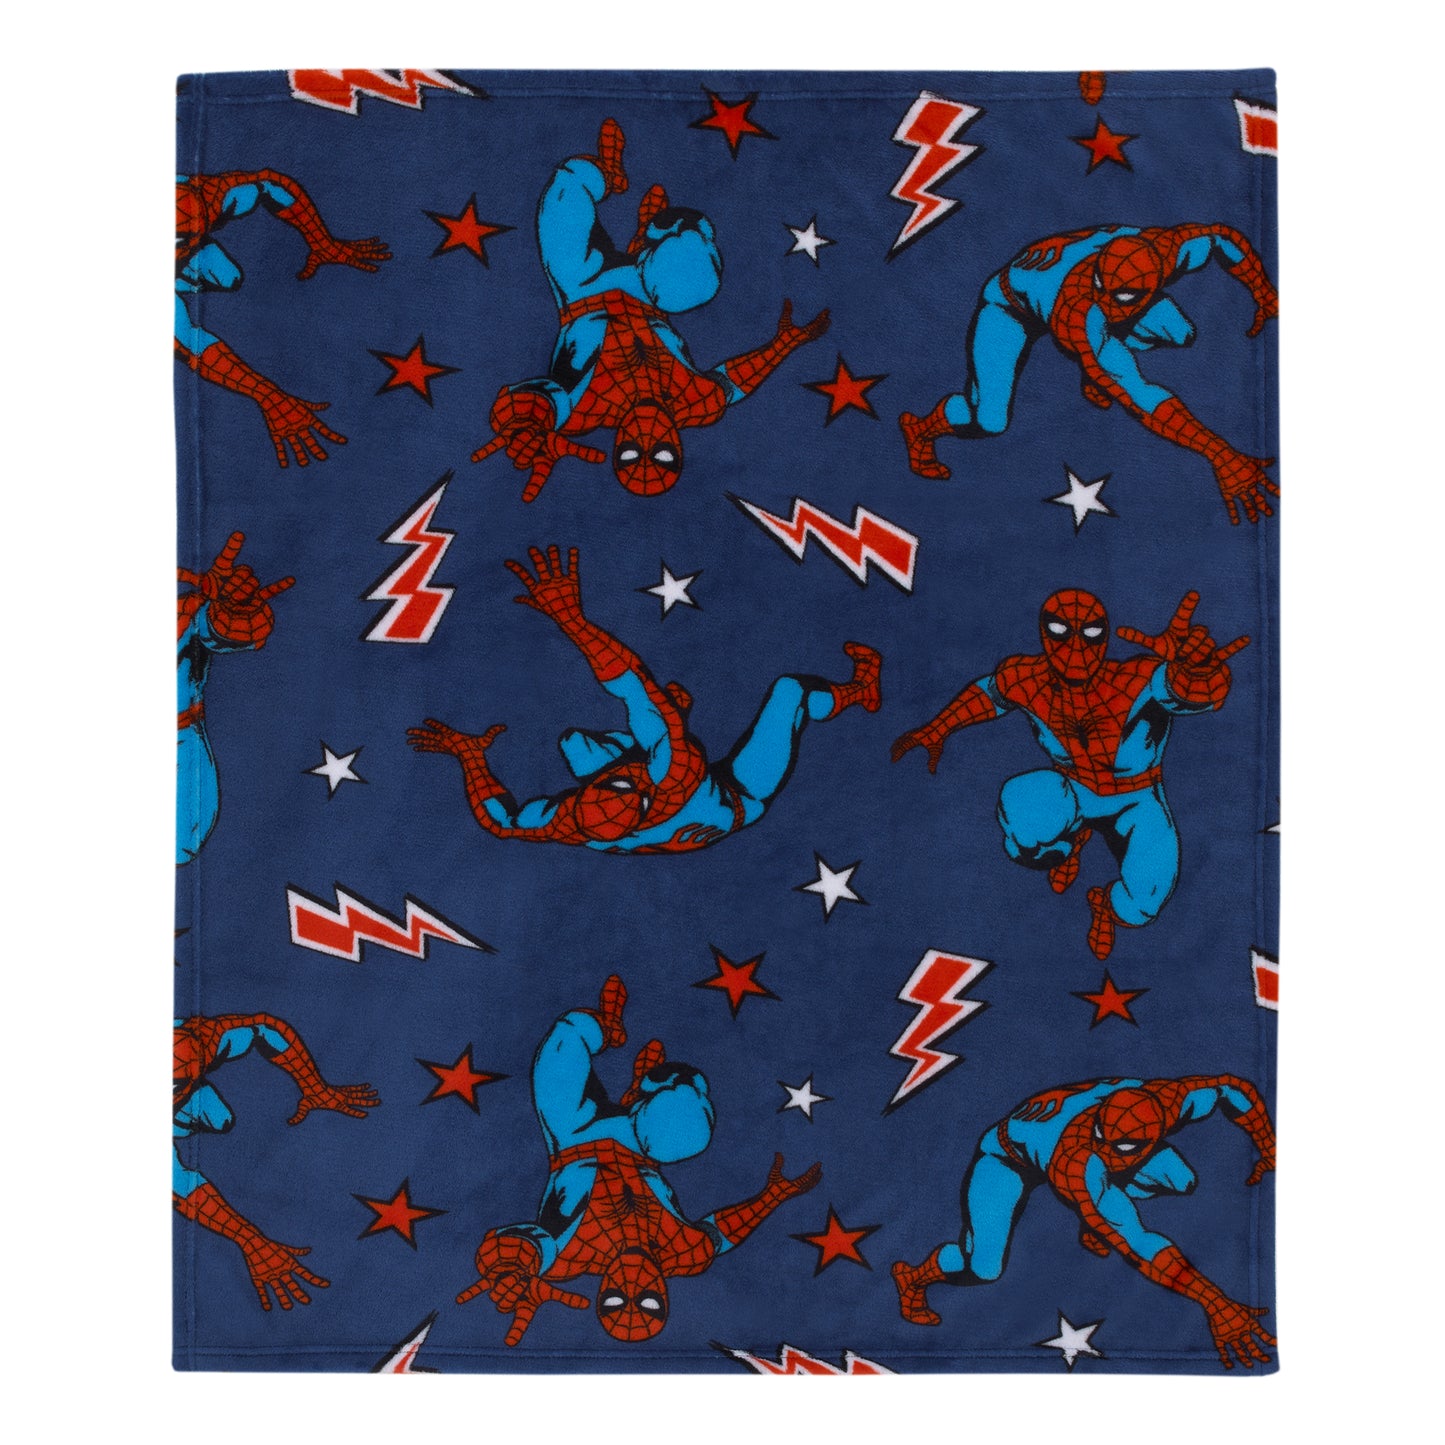 Marvel Spiderman Blue, Red and White Super Soft Plush Baby Blanket